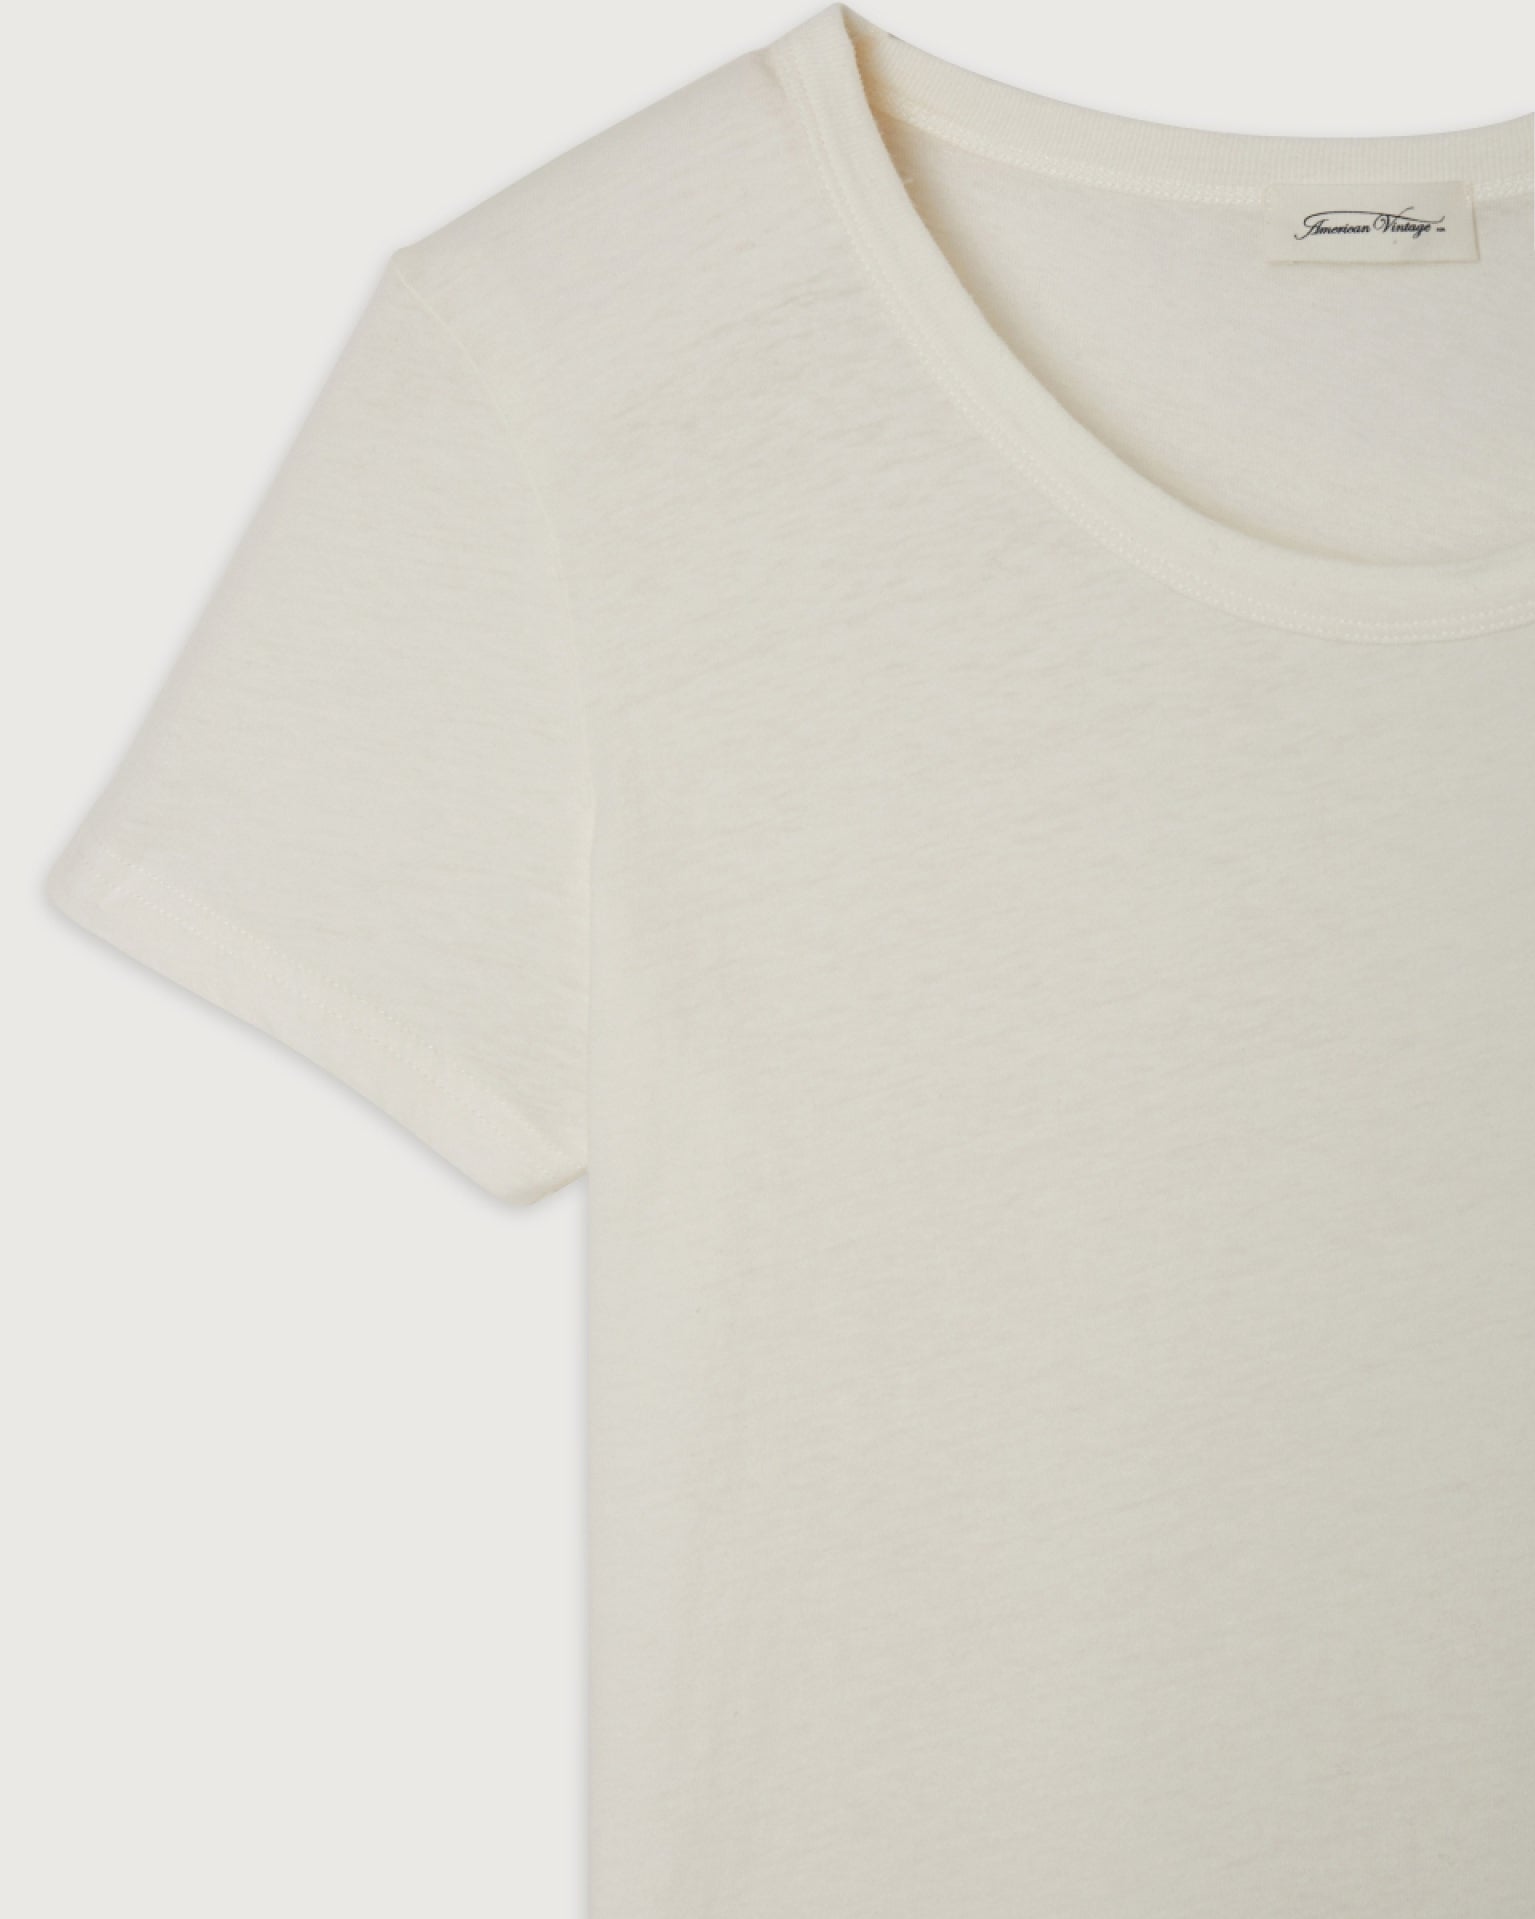 T-shirt Gamipy - Blanc